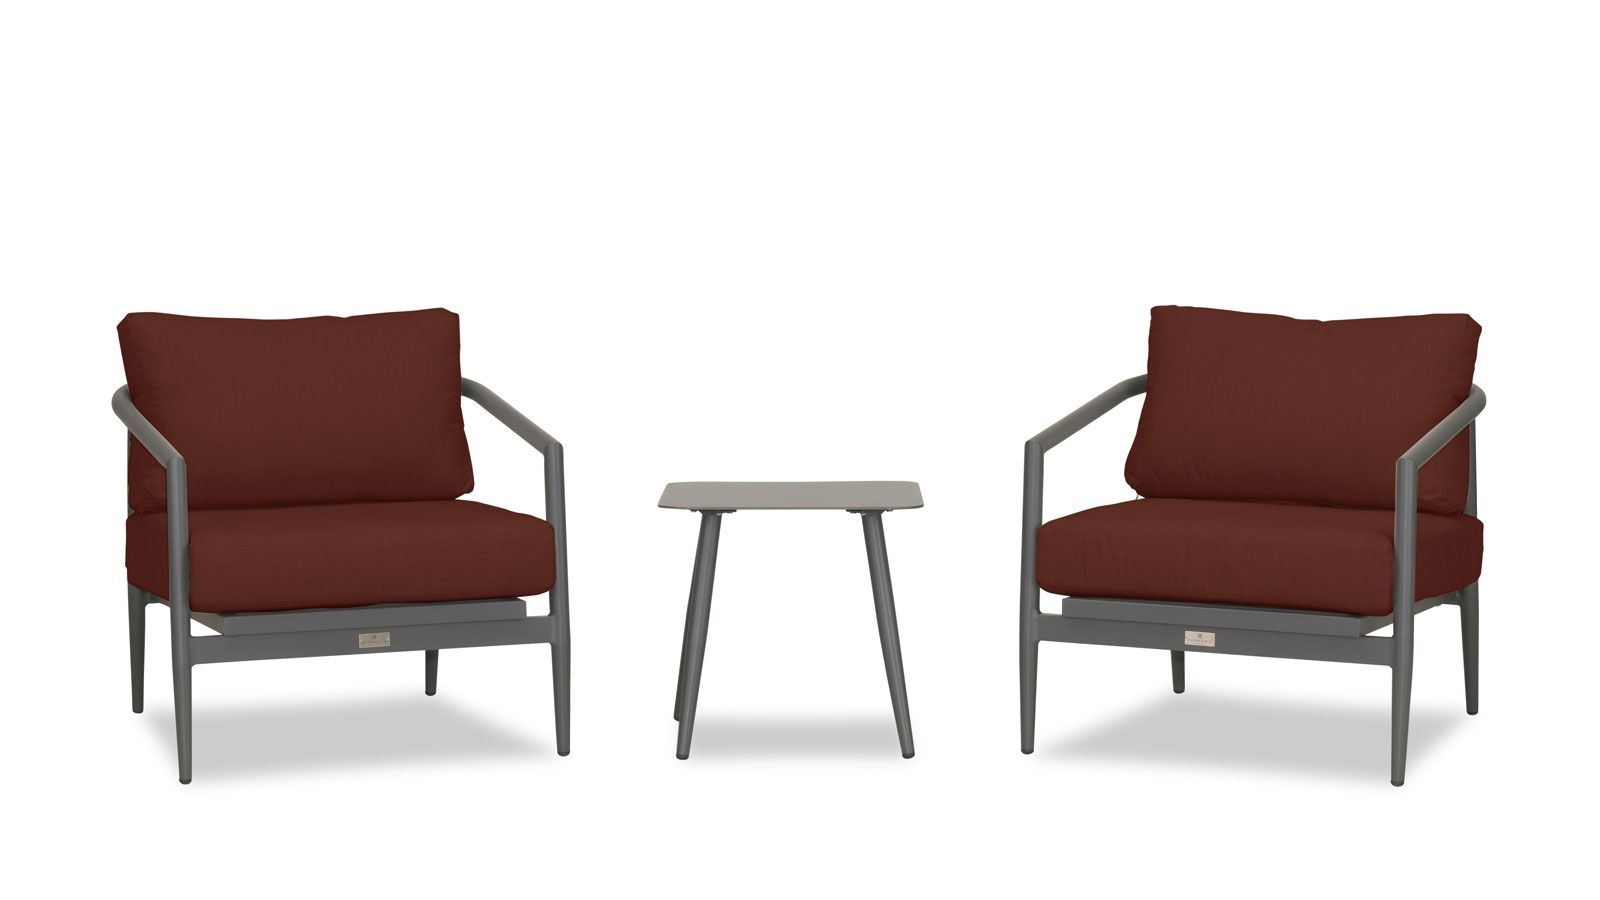 Harmonia Living -  Olio 3 Piece Club Chair Set - Slate/Pebble Gray | OLIO-SL-PG-SET104